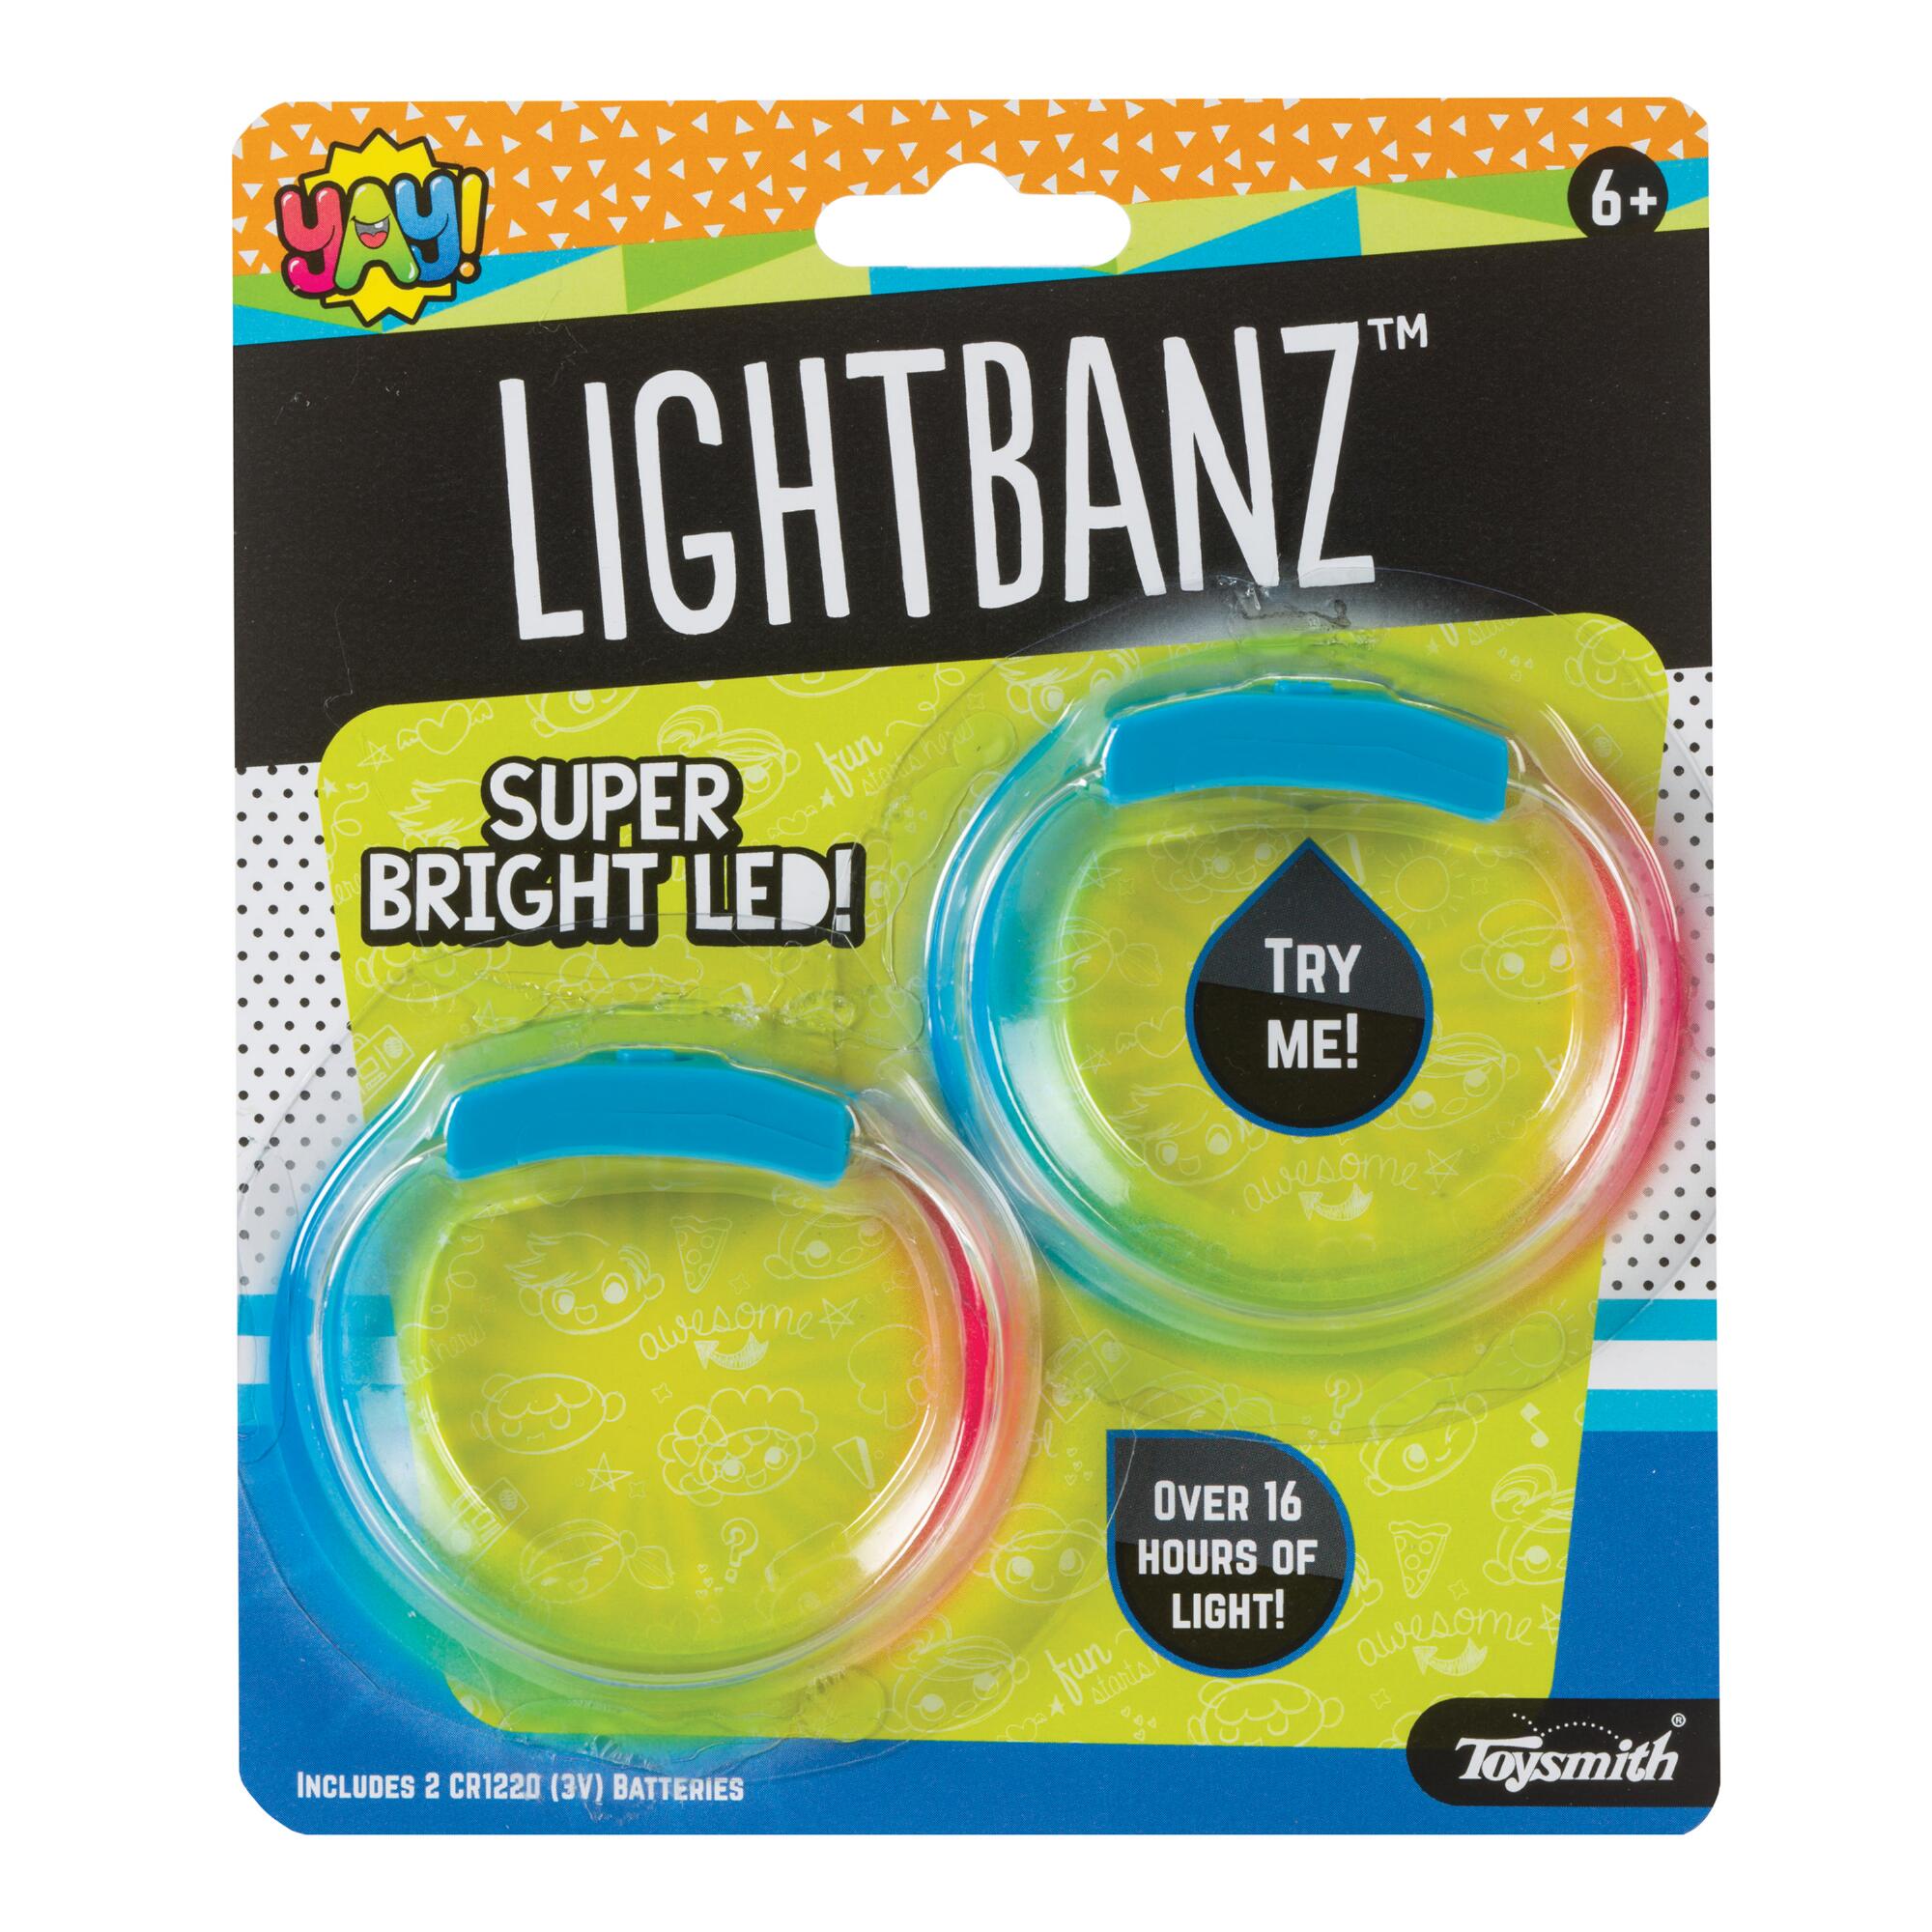 Toysmith Lightbanz by World Market